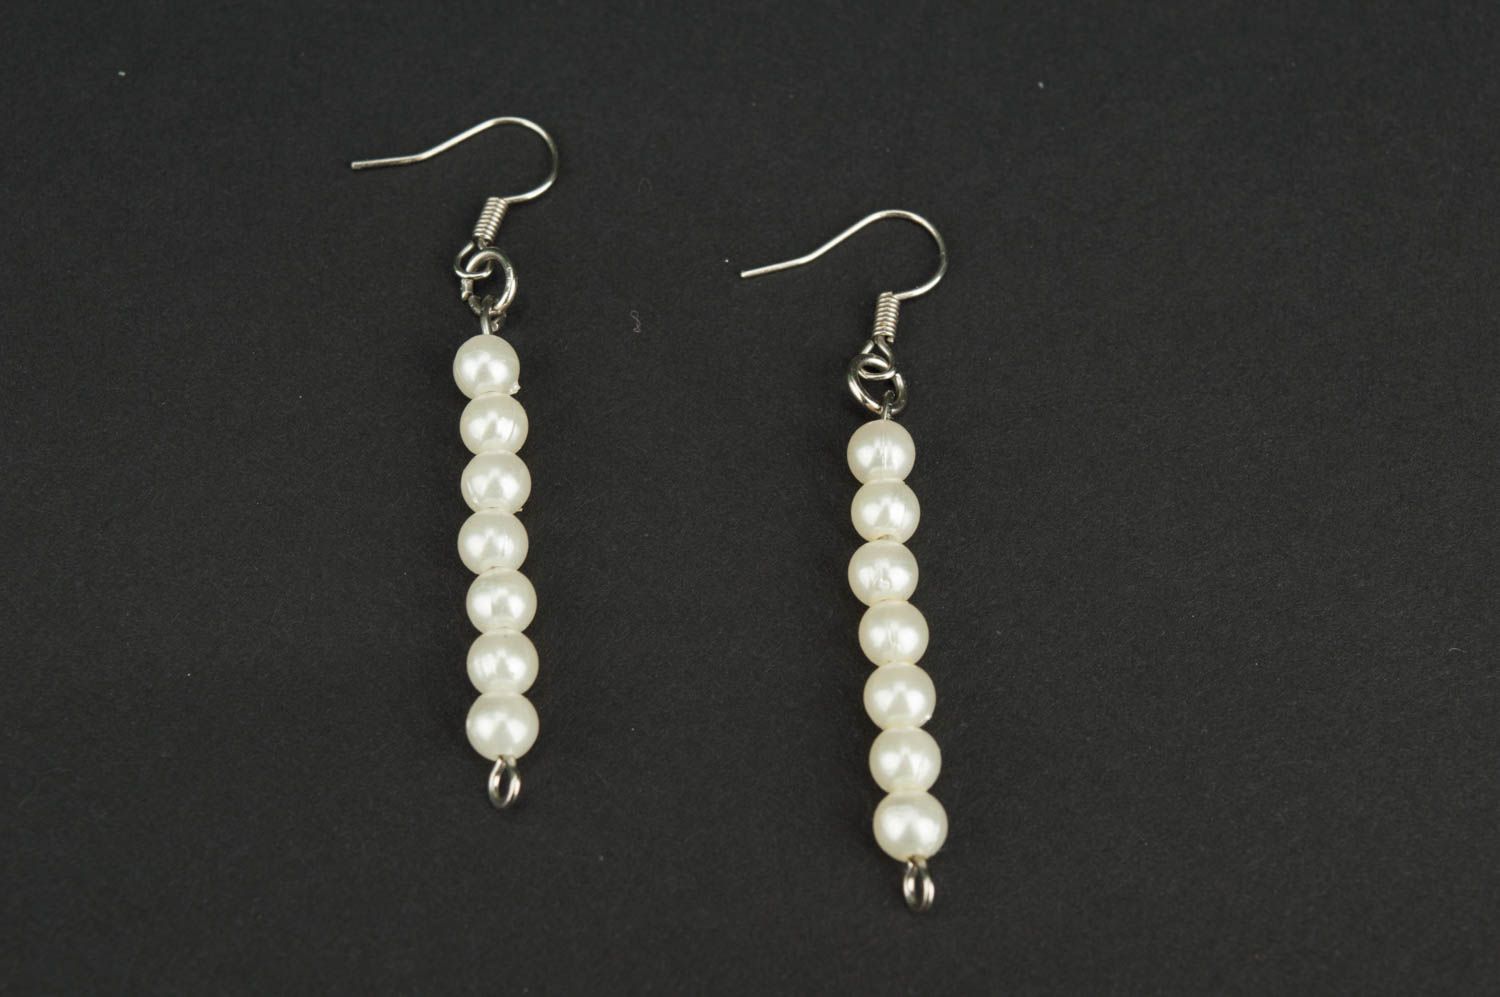 Handmade earrings beaded jewelry designer accessories gift ideas for women photo 4